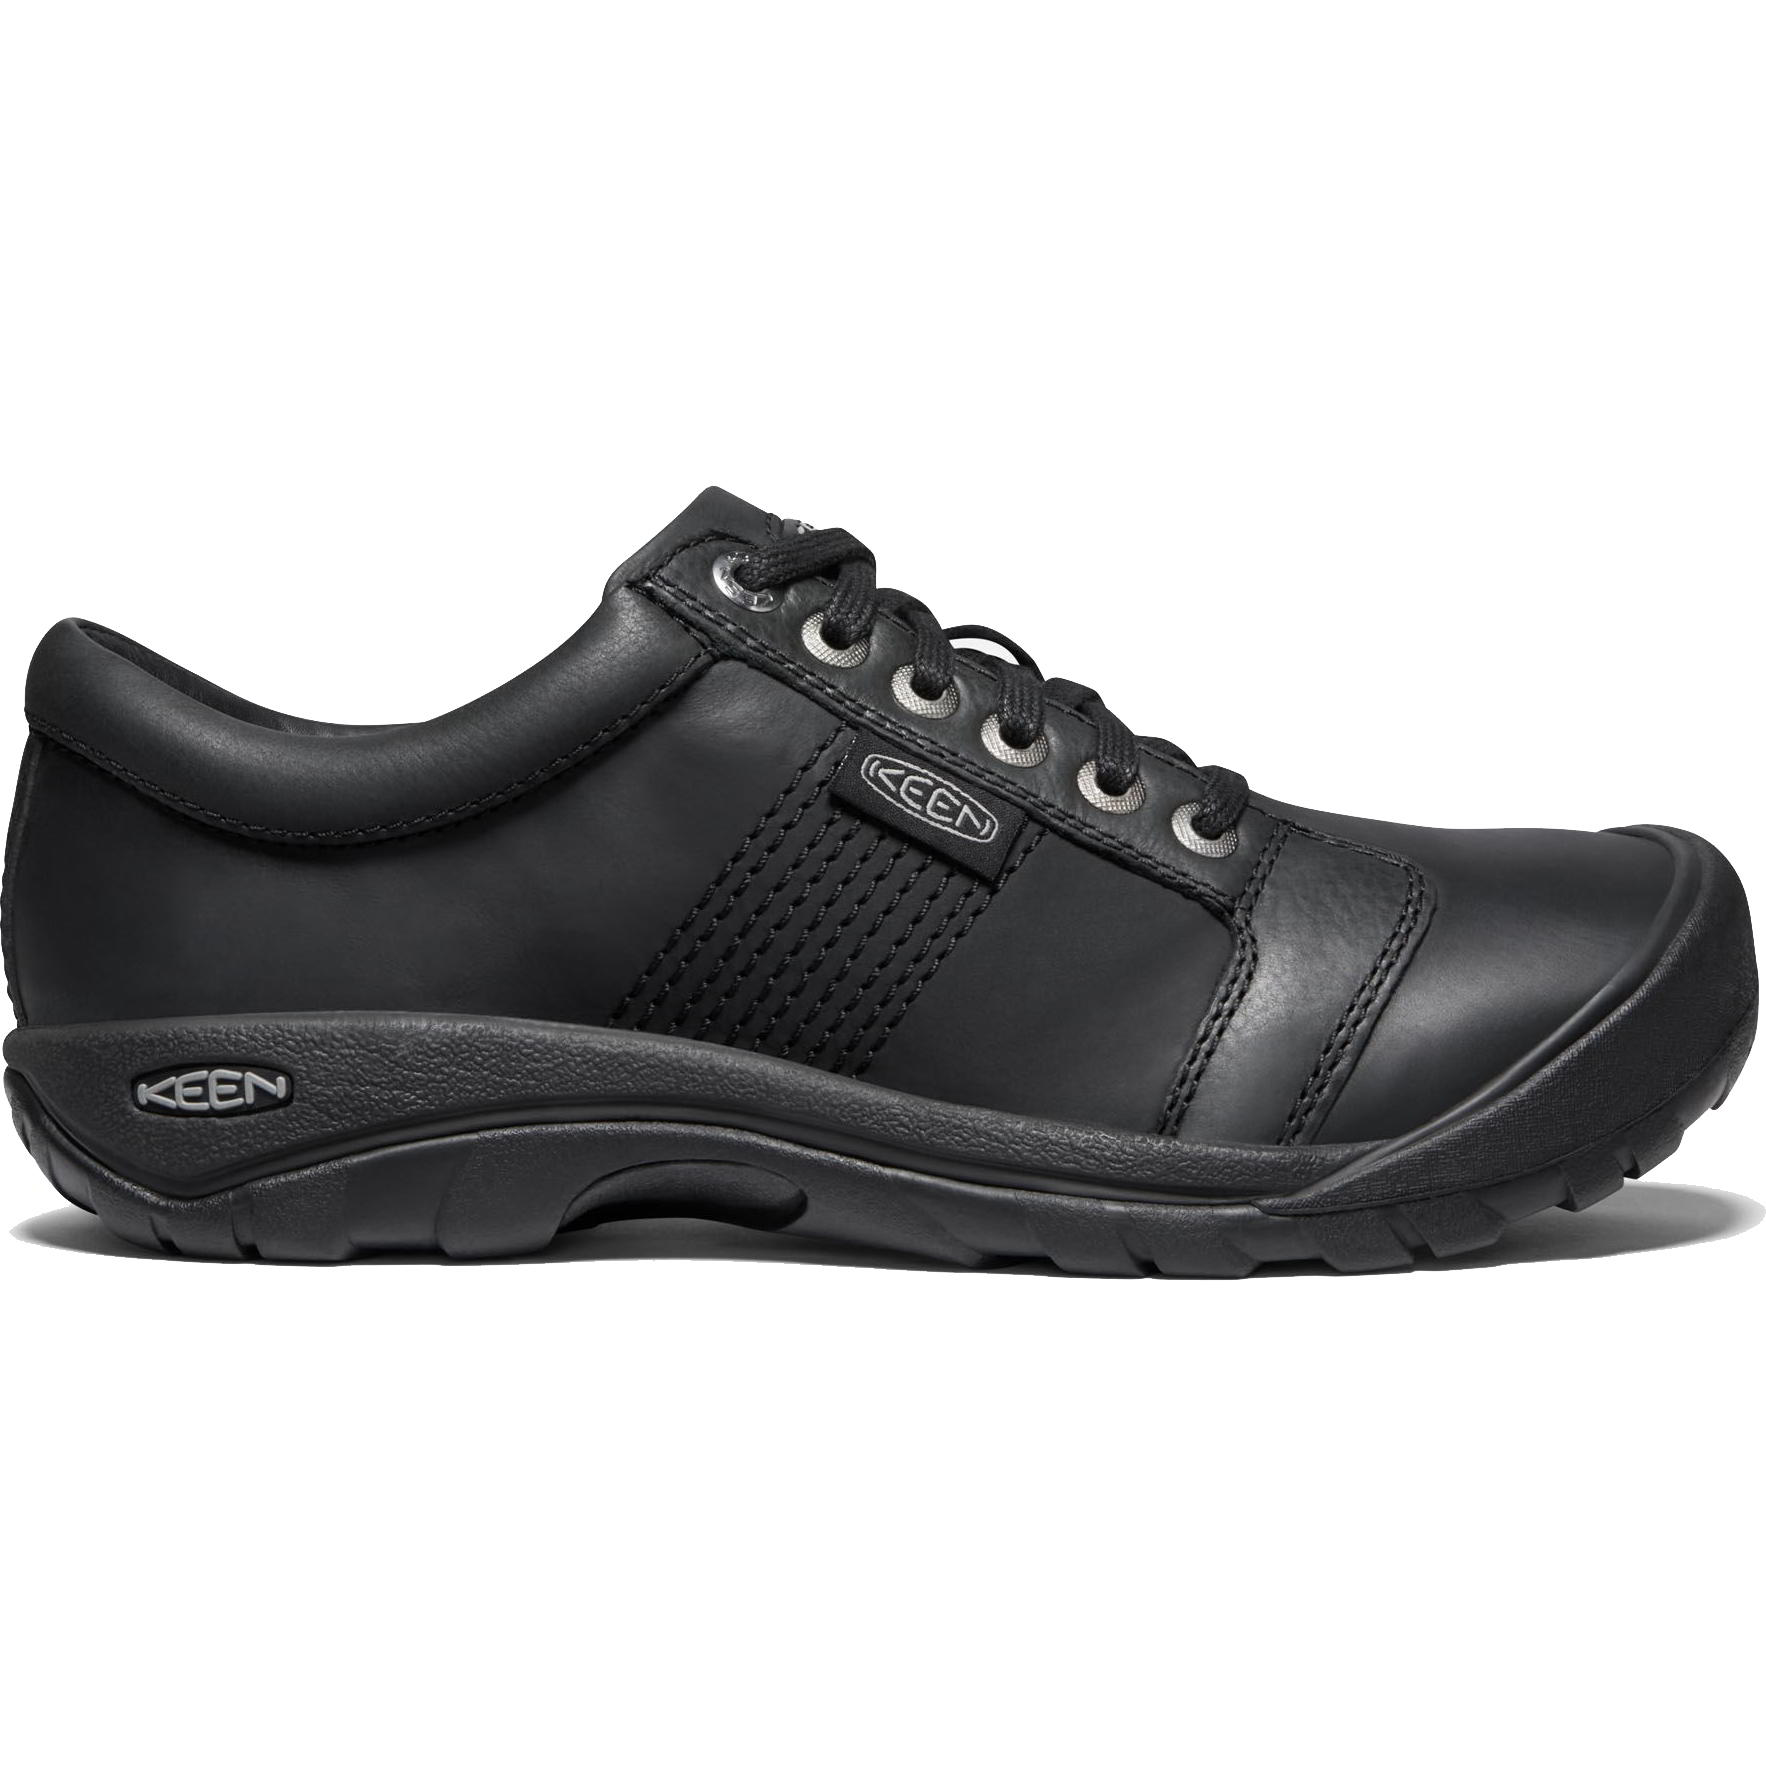 Keen Mens Austin Casual Walking Hiking Shoes - UK 8.5